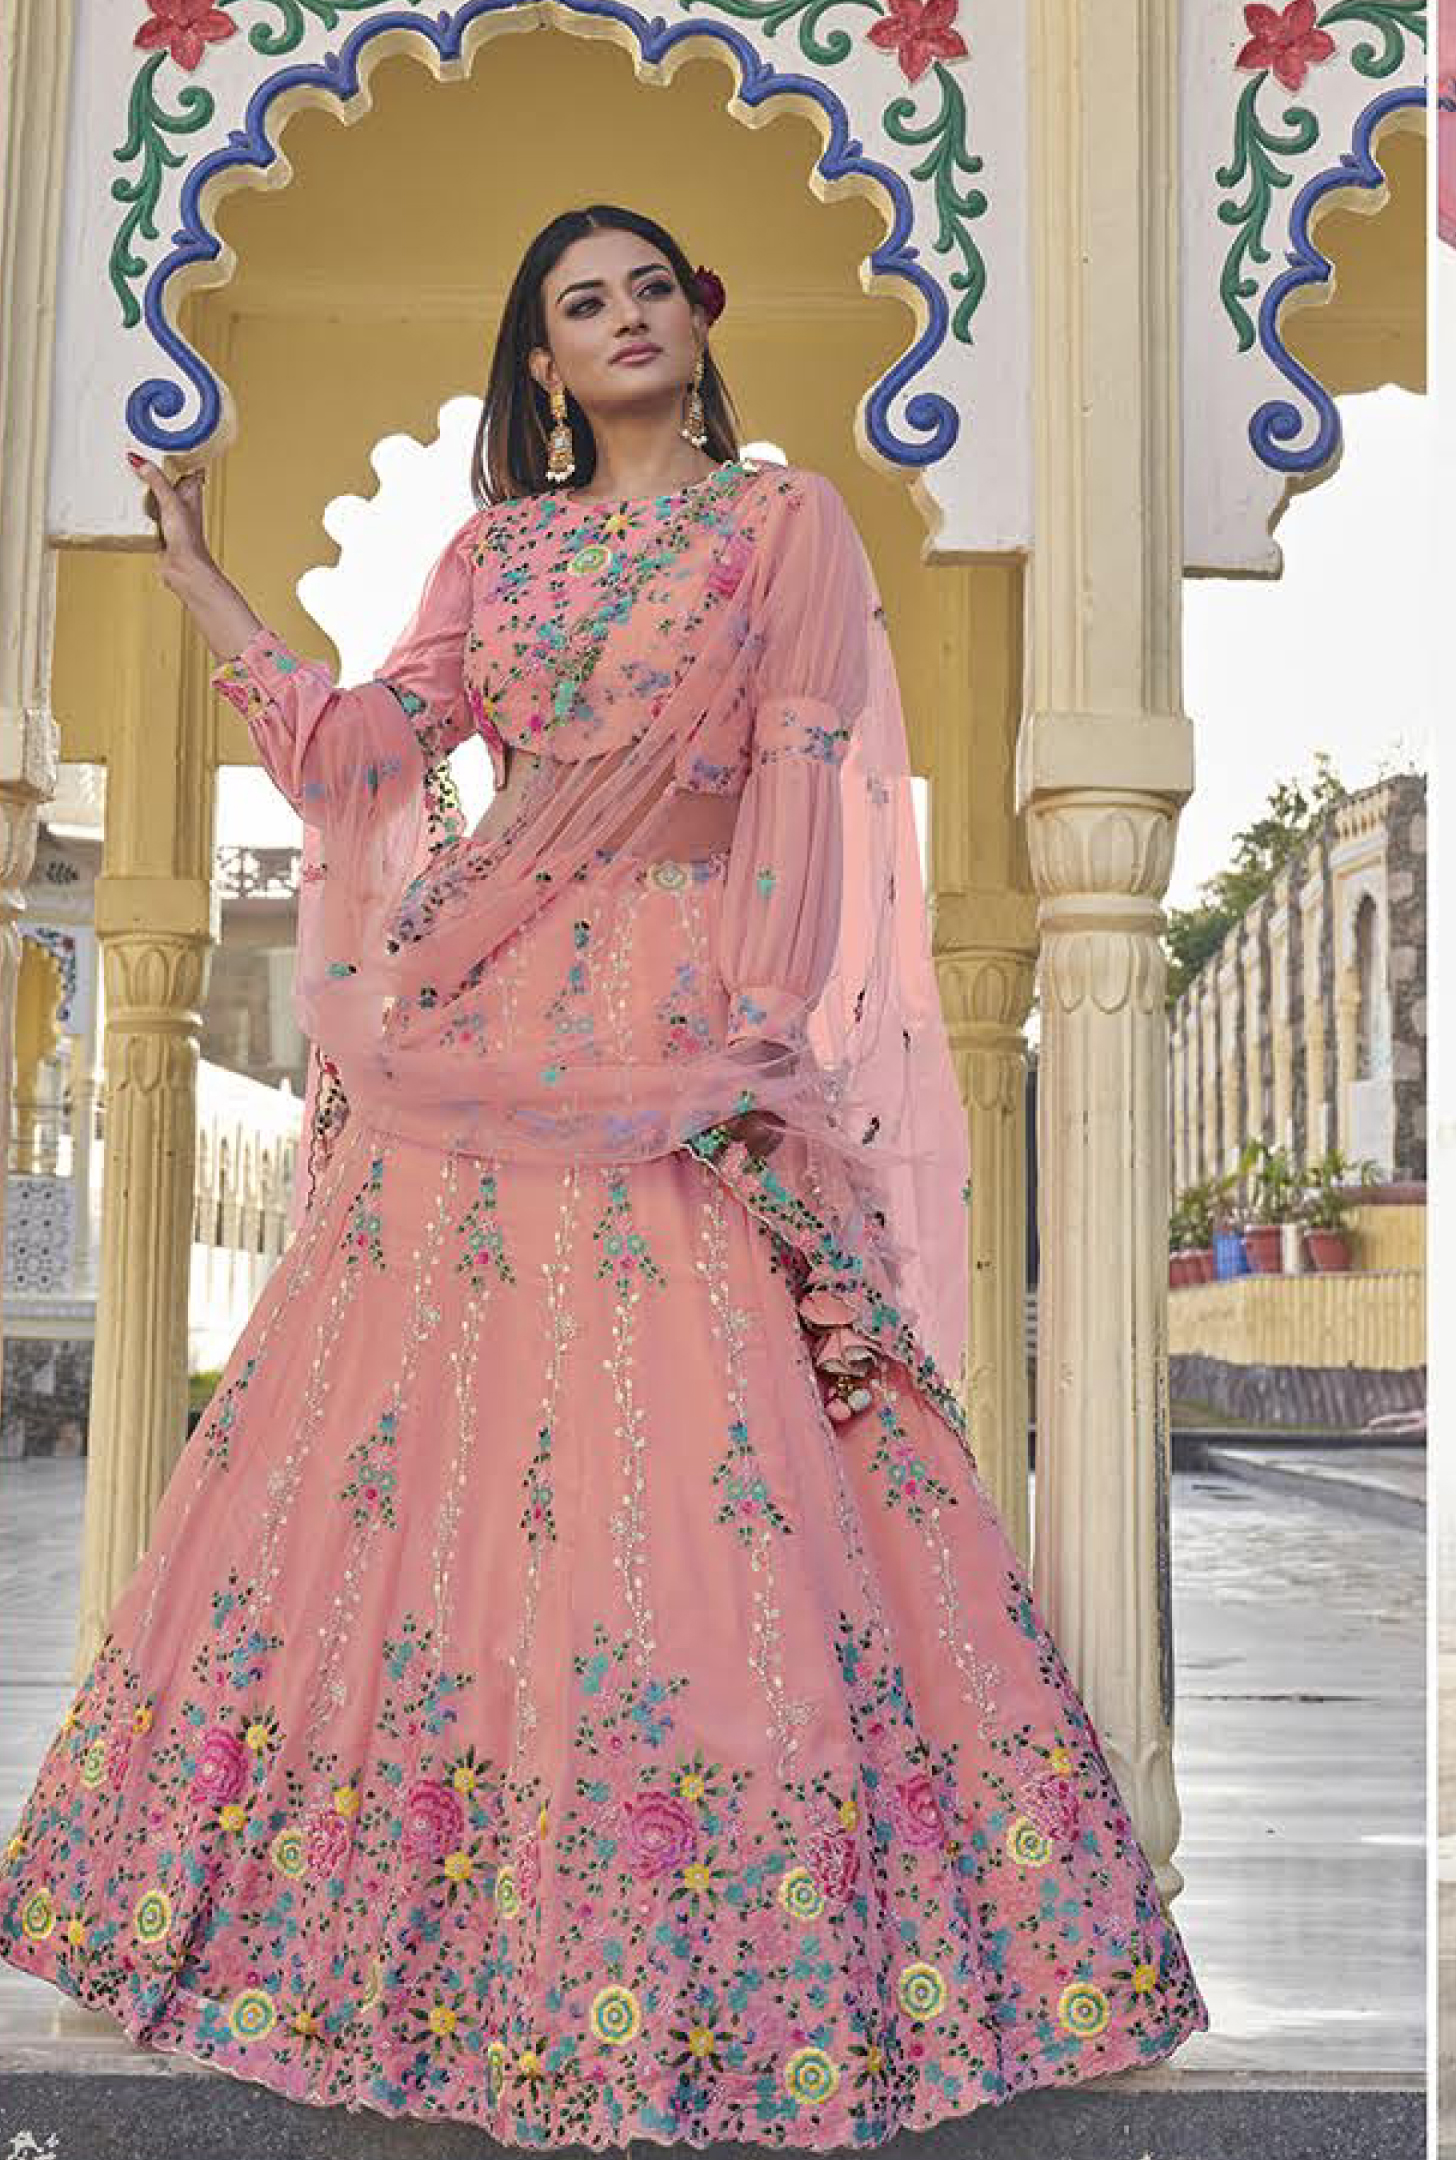 Royal Golden Wedding Lehenga Choli | Buy Indian Wear